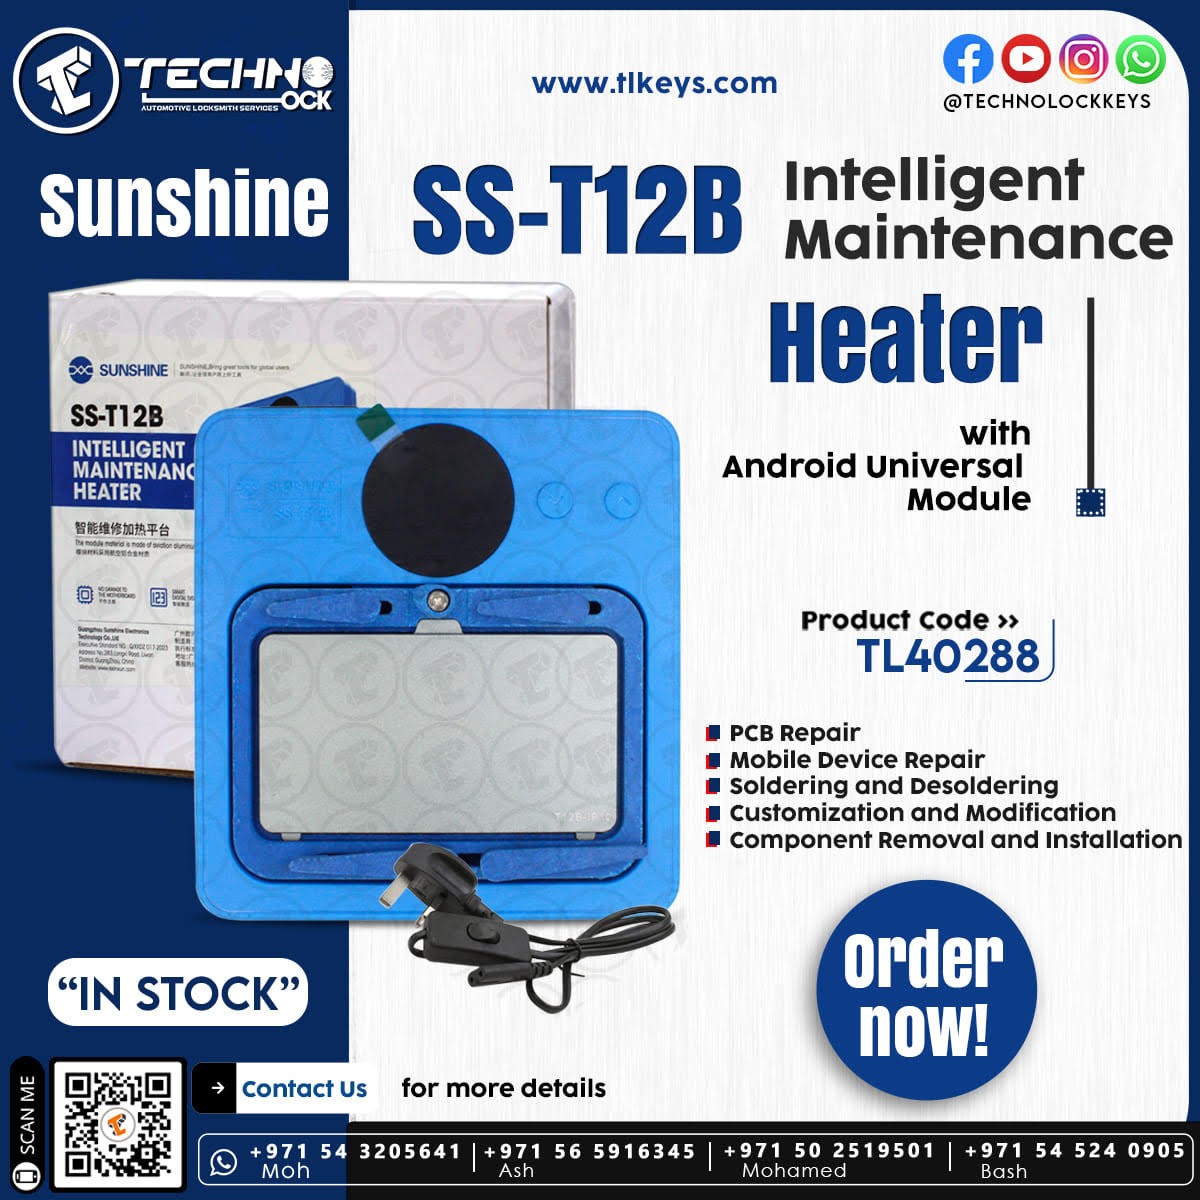 Sunshine SS-T12B Intelligent Maintenance Heater
